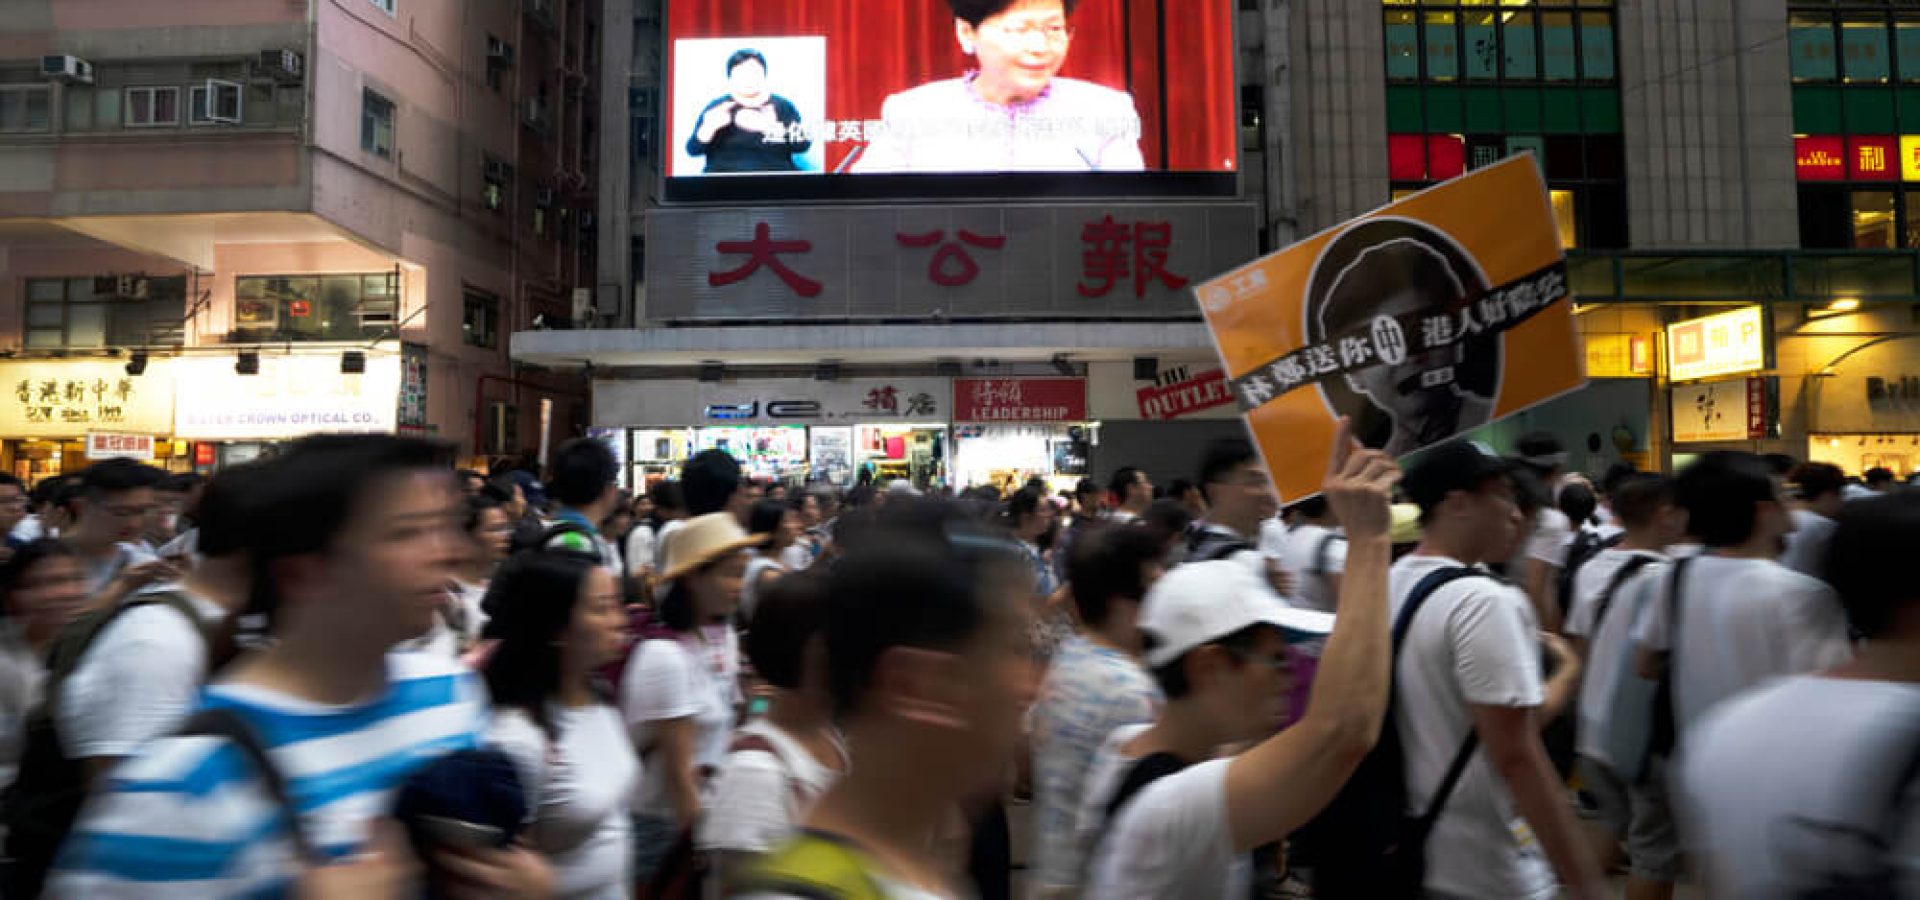 Wibest – Hong Kong Chief Executive: Protesters in Hong Kong